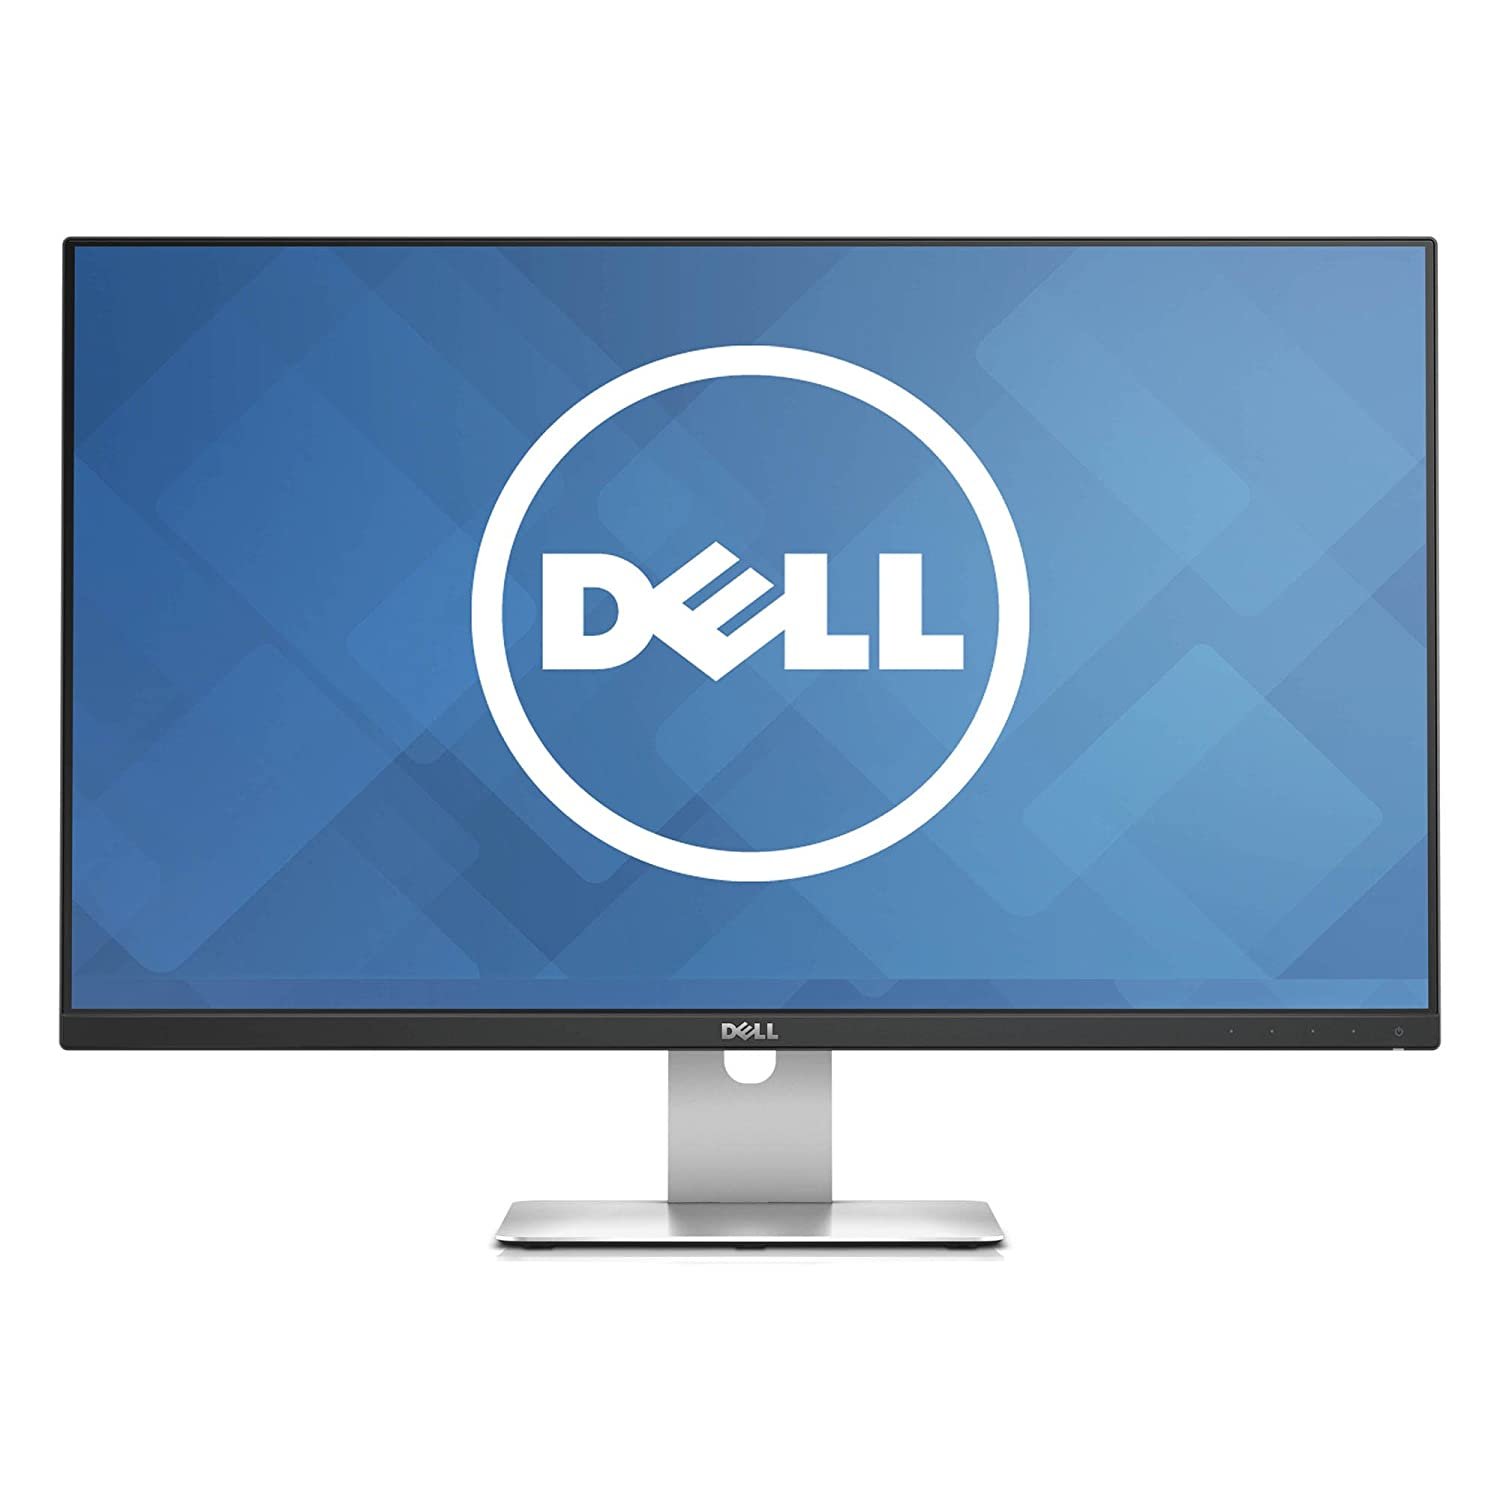 Dell S2715H Black 27 inch Widescreen LED Monitor